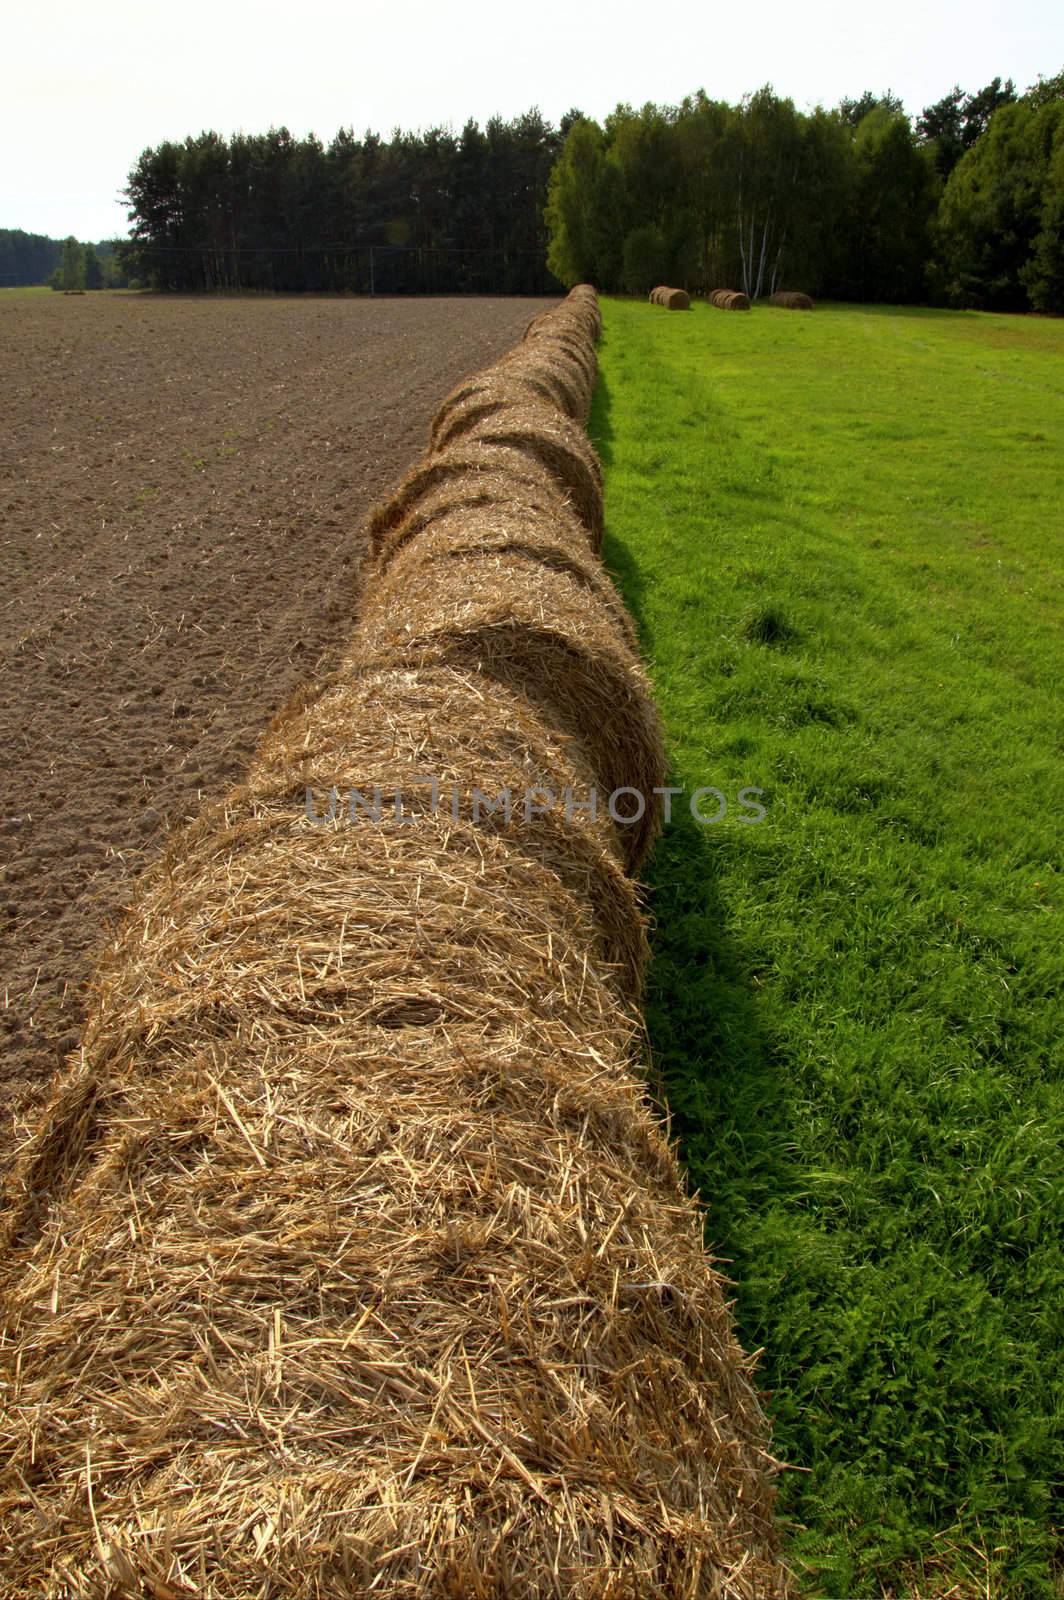 Bales of straw after harvest grain by PRSchreyner